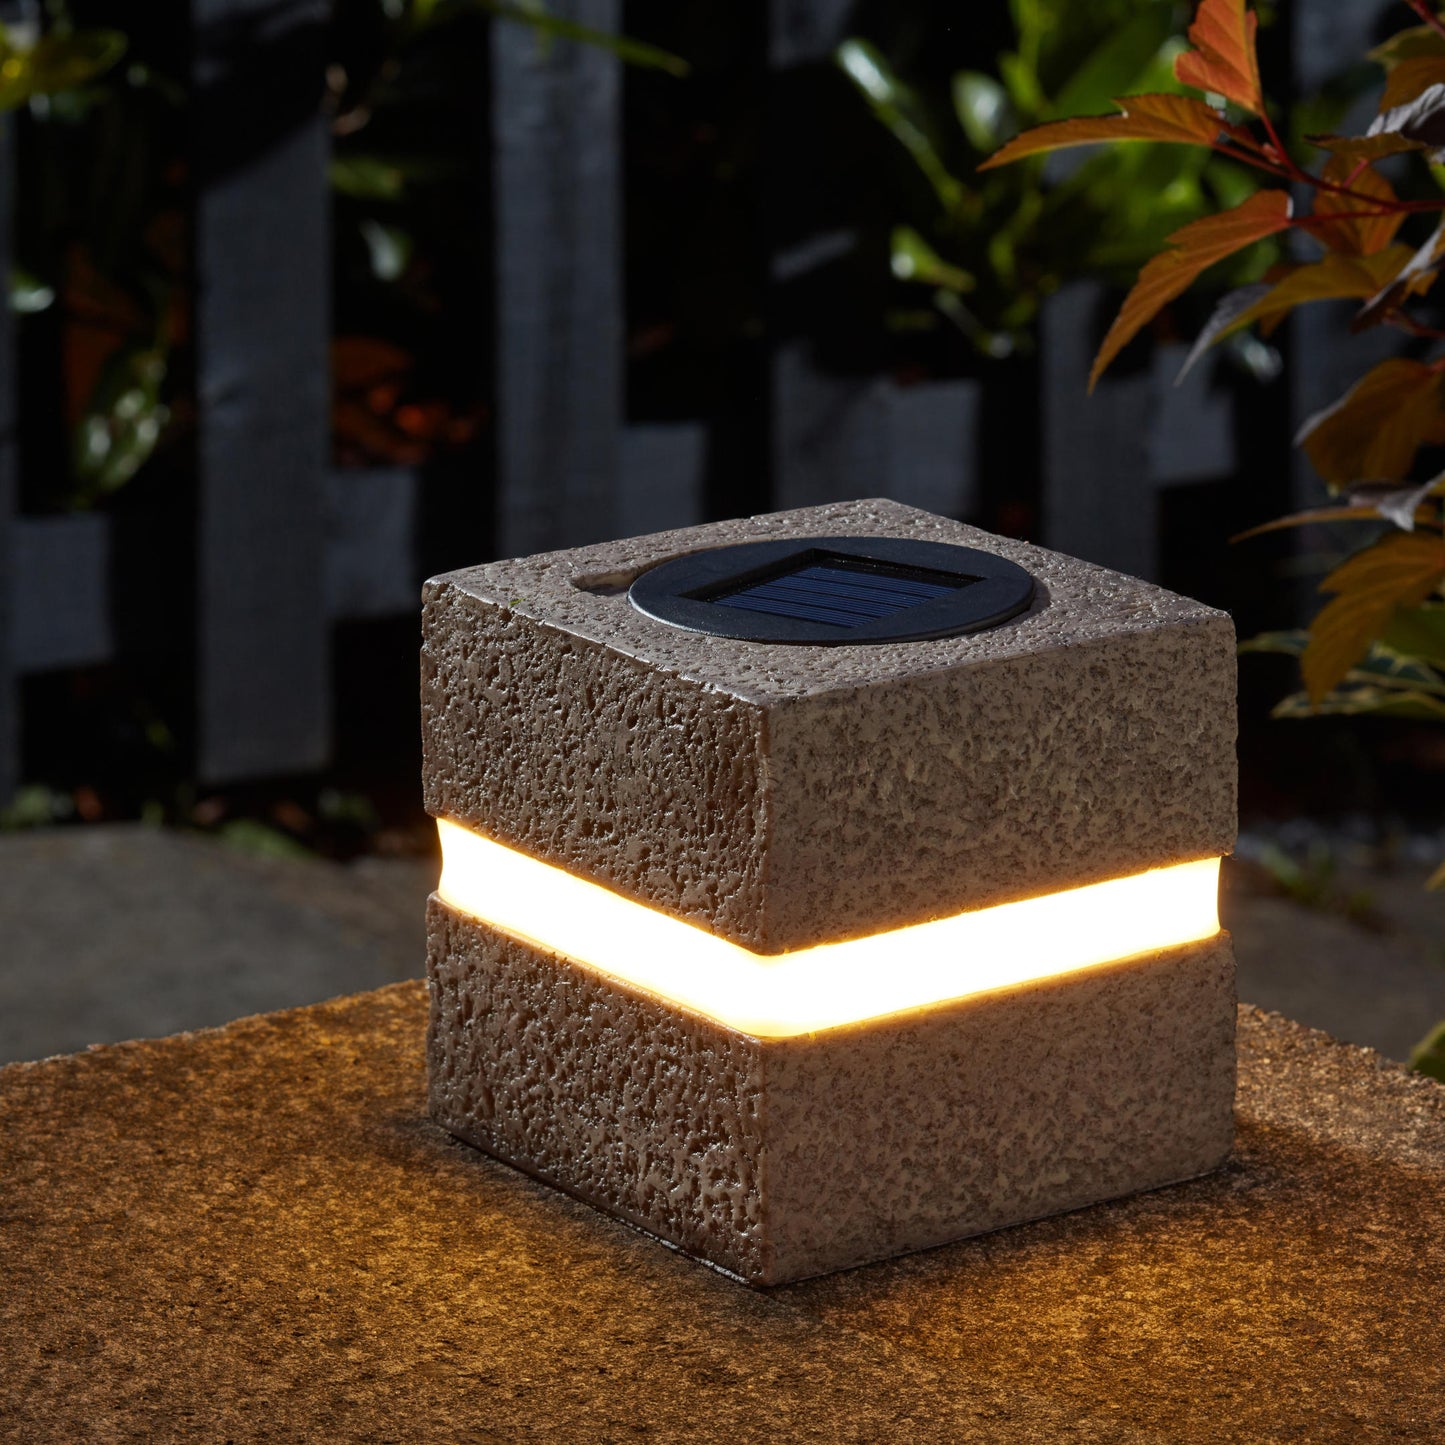 Cube Lights - Warm White ⸱ solárne svietidlá 2ks